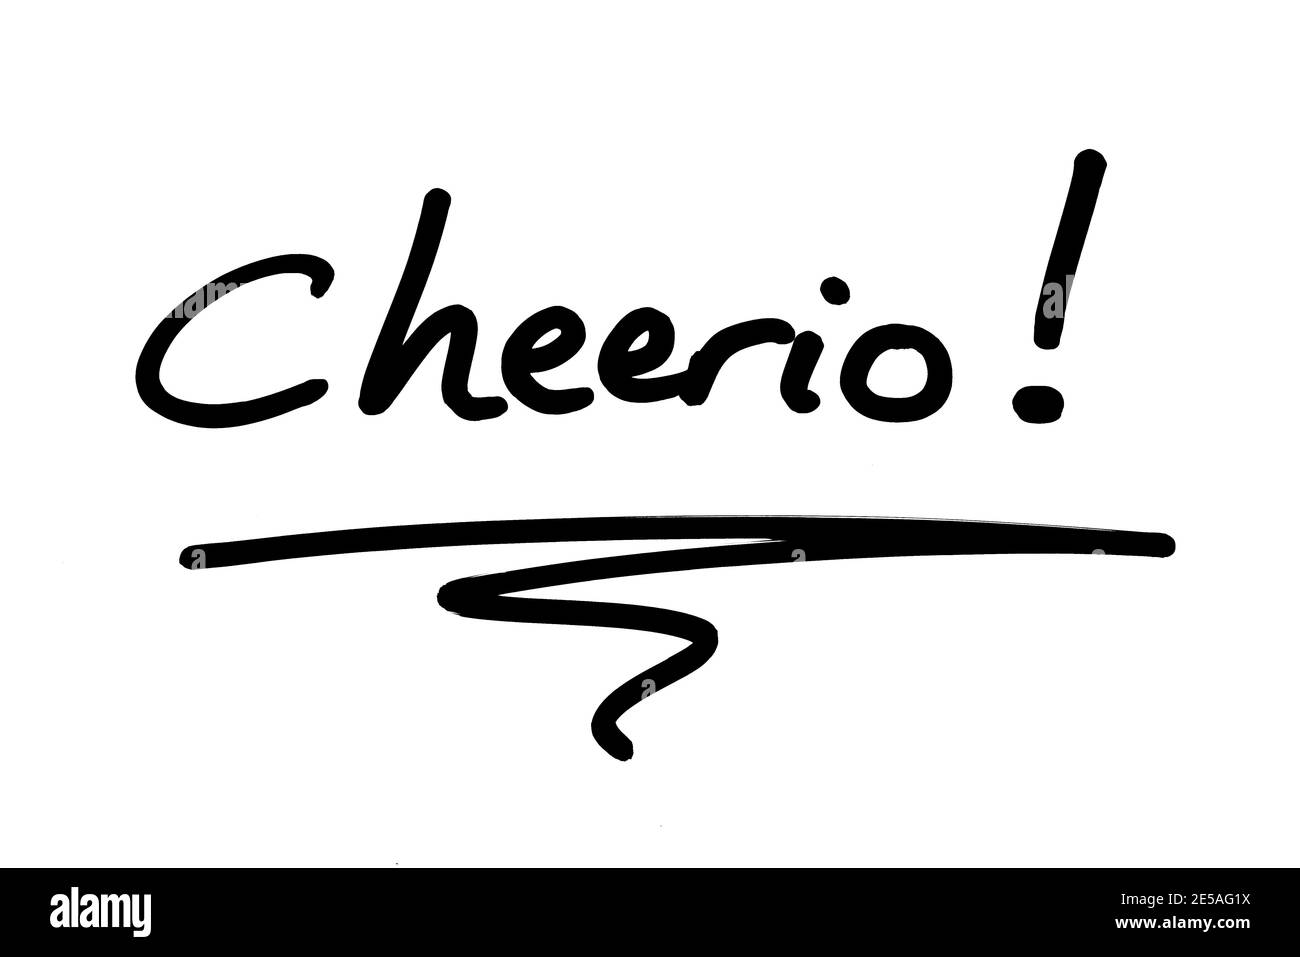 The word Cheerio! handwritten on a white background. Stock Photo